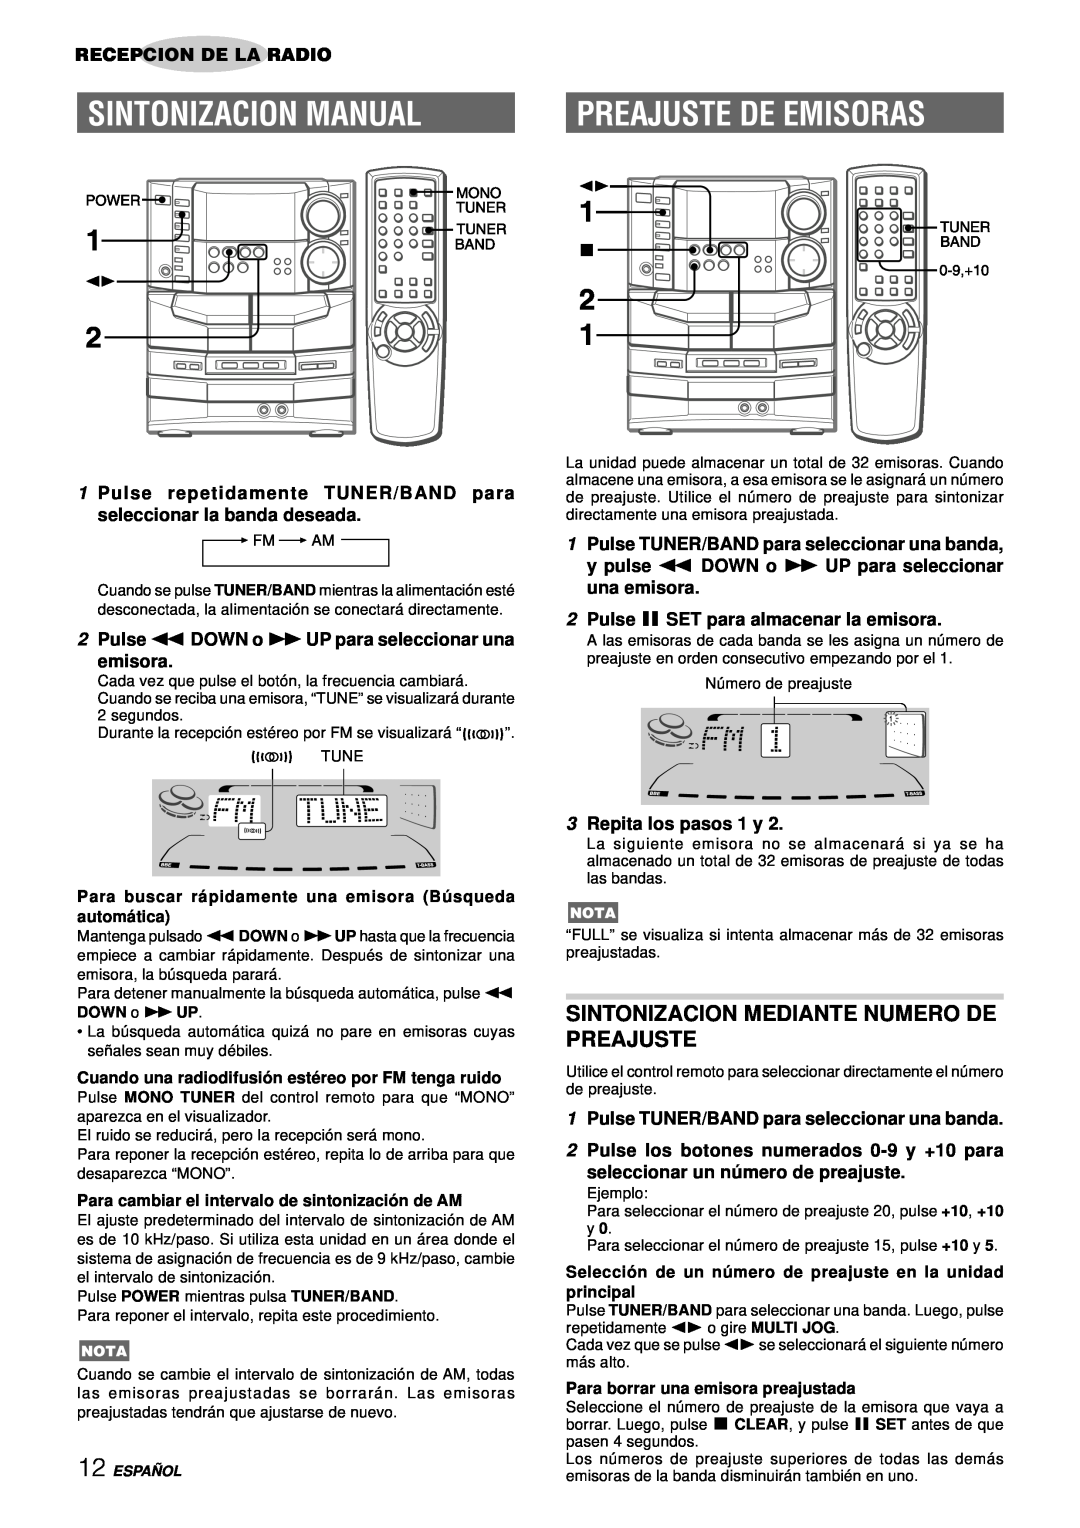 Aiwa NSX-DS8 manual Sintonizacion Manual, Preajuste De Emisoras, Sintonizacion Mediante Numero De Preajuste 